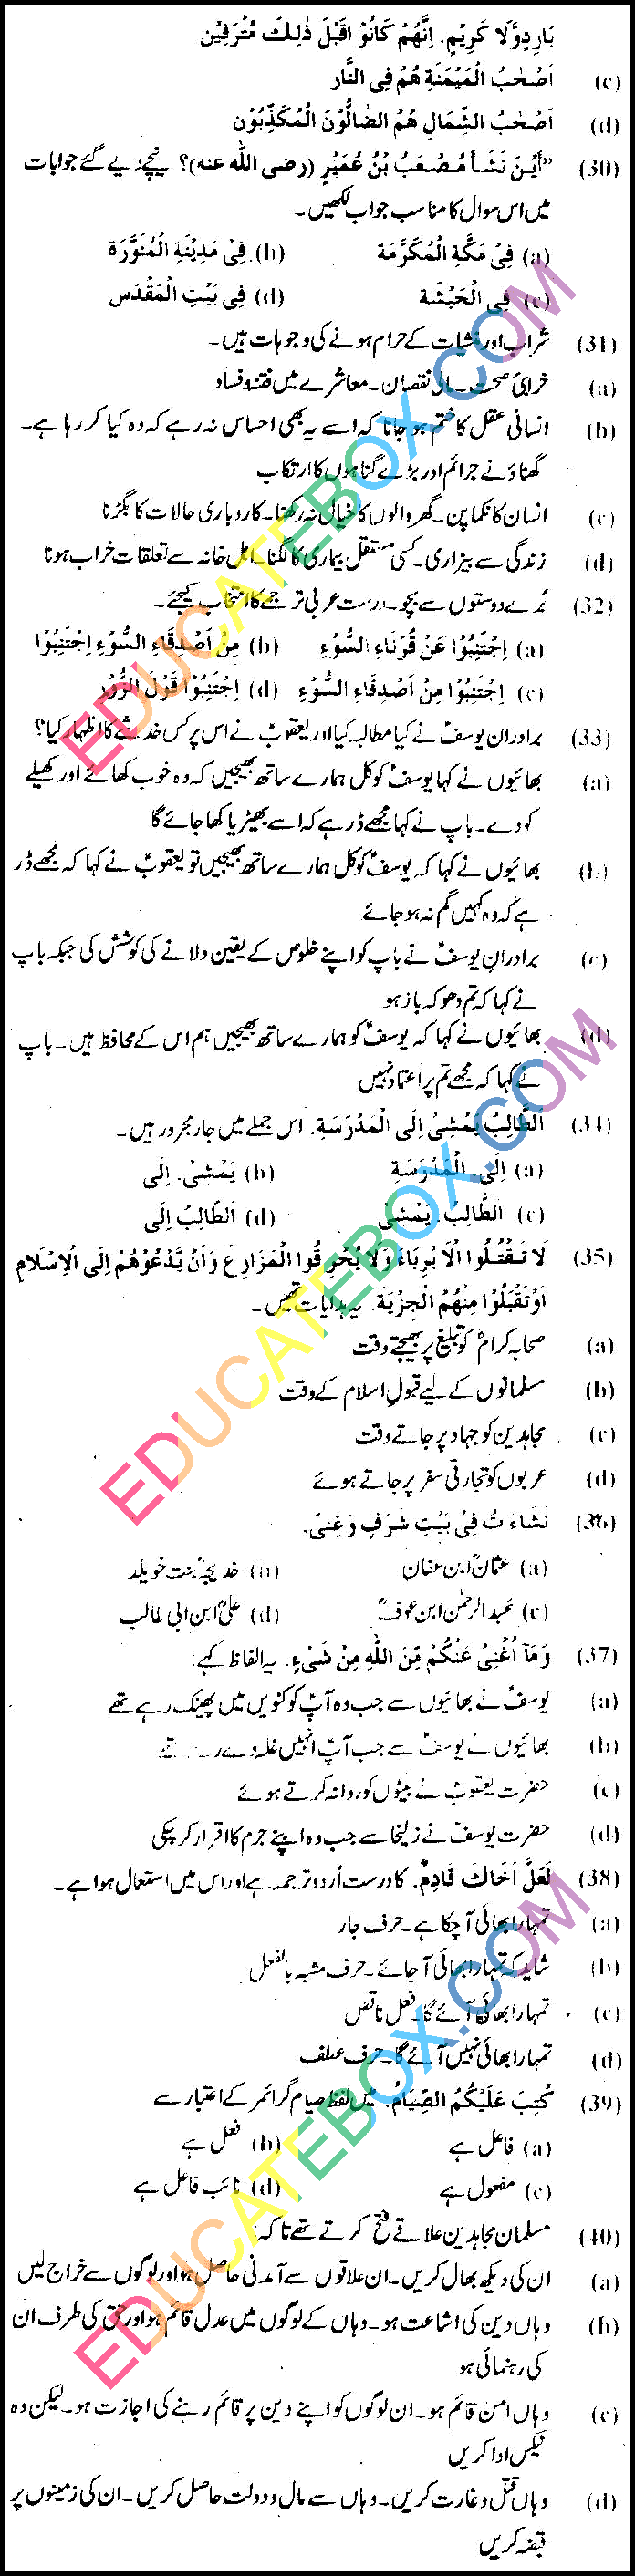 پیپر عربی برائے جماعت ہشتم (آٹھویں کلاس) 2011 پنجاب بورڈ معروضی طرز - Past Paper 8th Class Arabic Punjab Board (PEC) 2011 Page 3 Objective Type